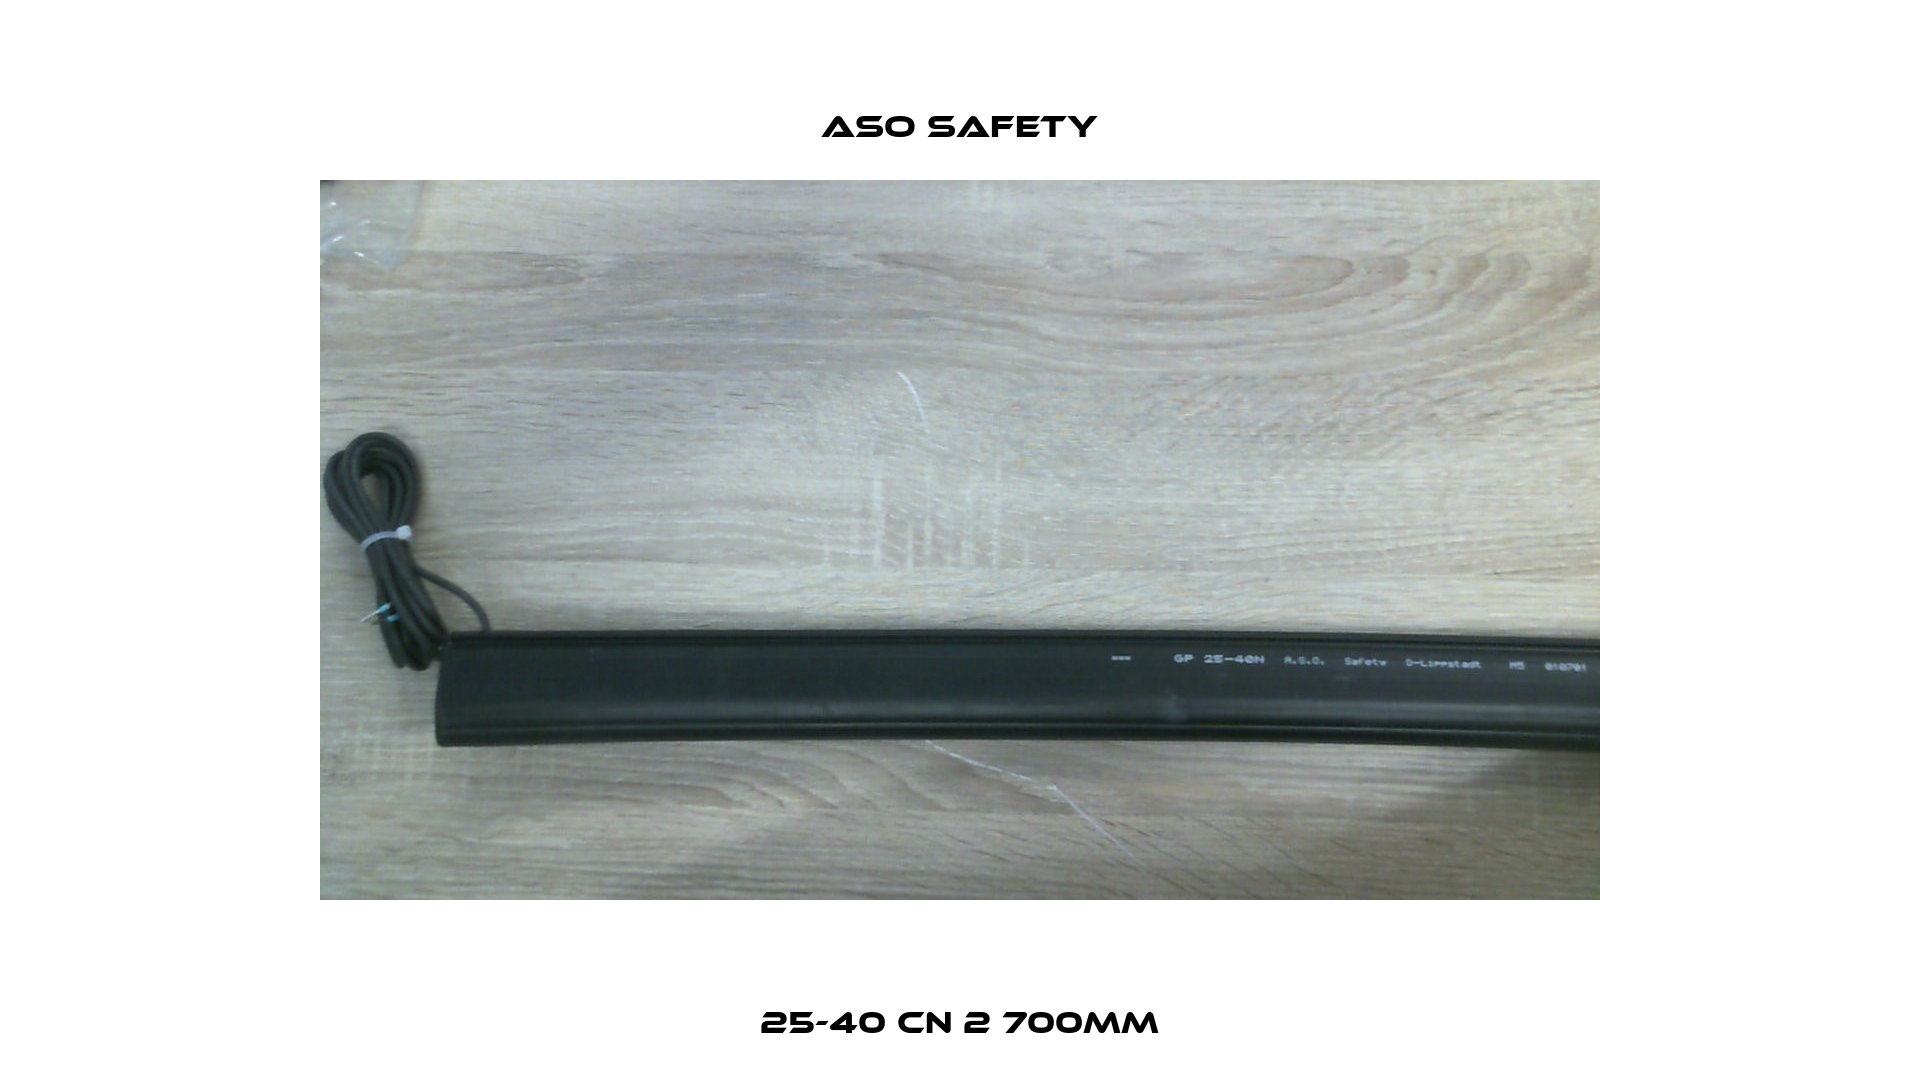 25-40 CN 2 700mm ASO SAFETY